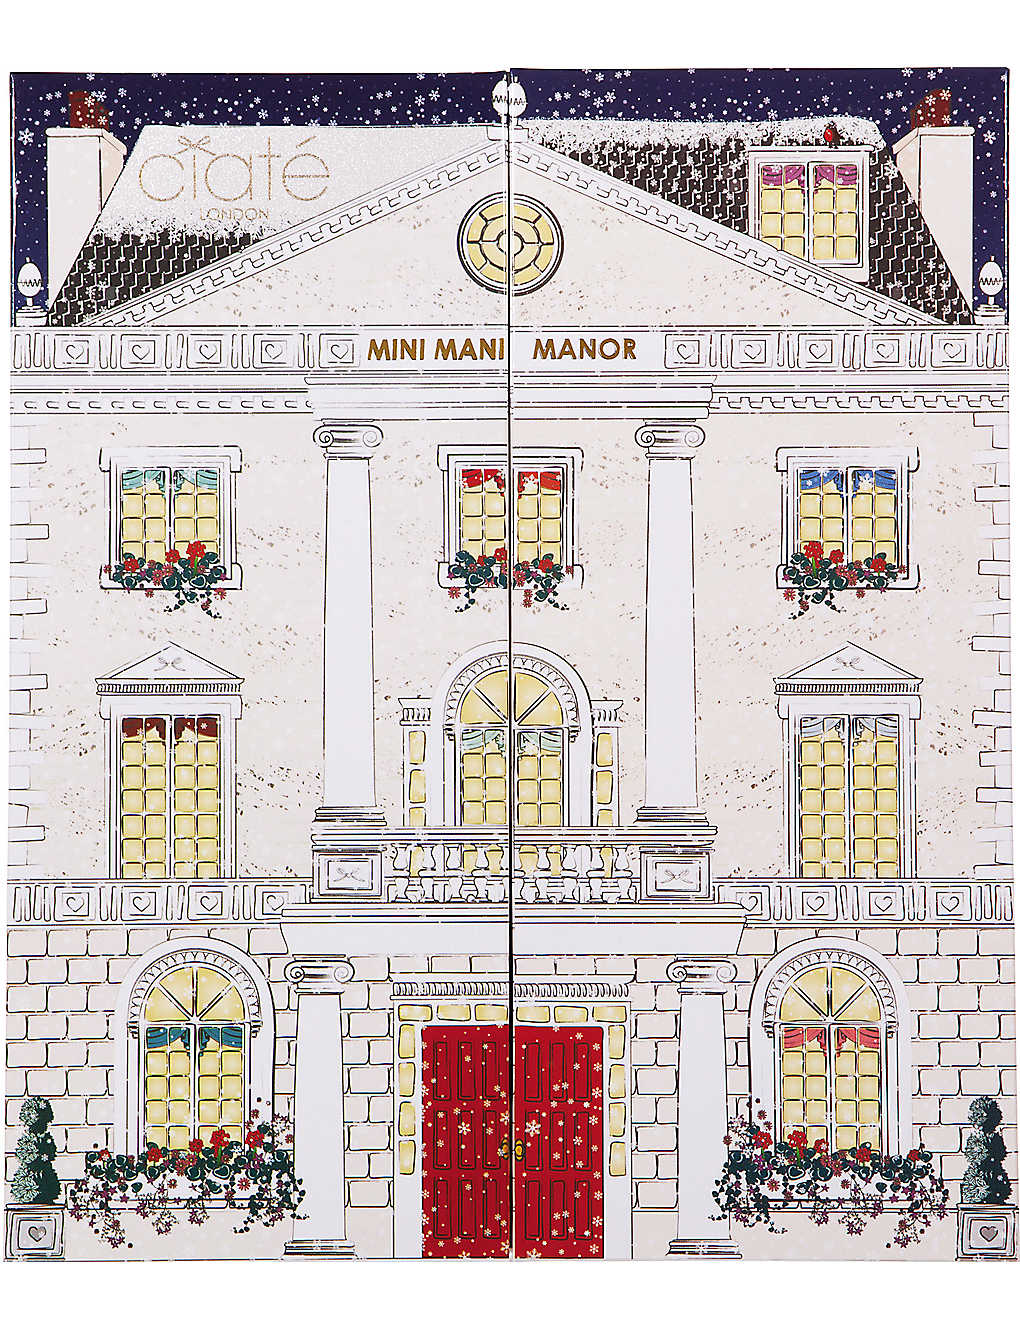 CIATE Mini Mani Manor nail polish advent calendar